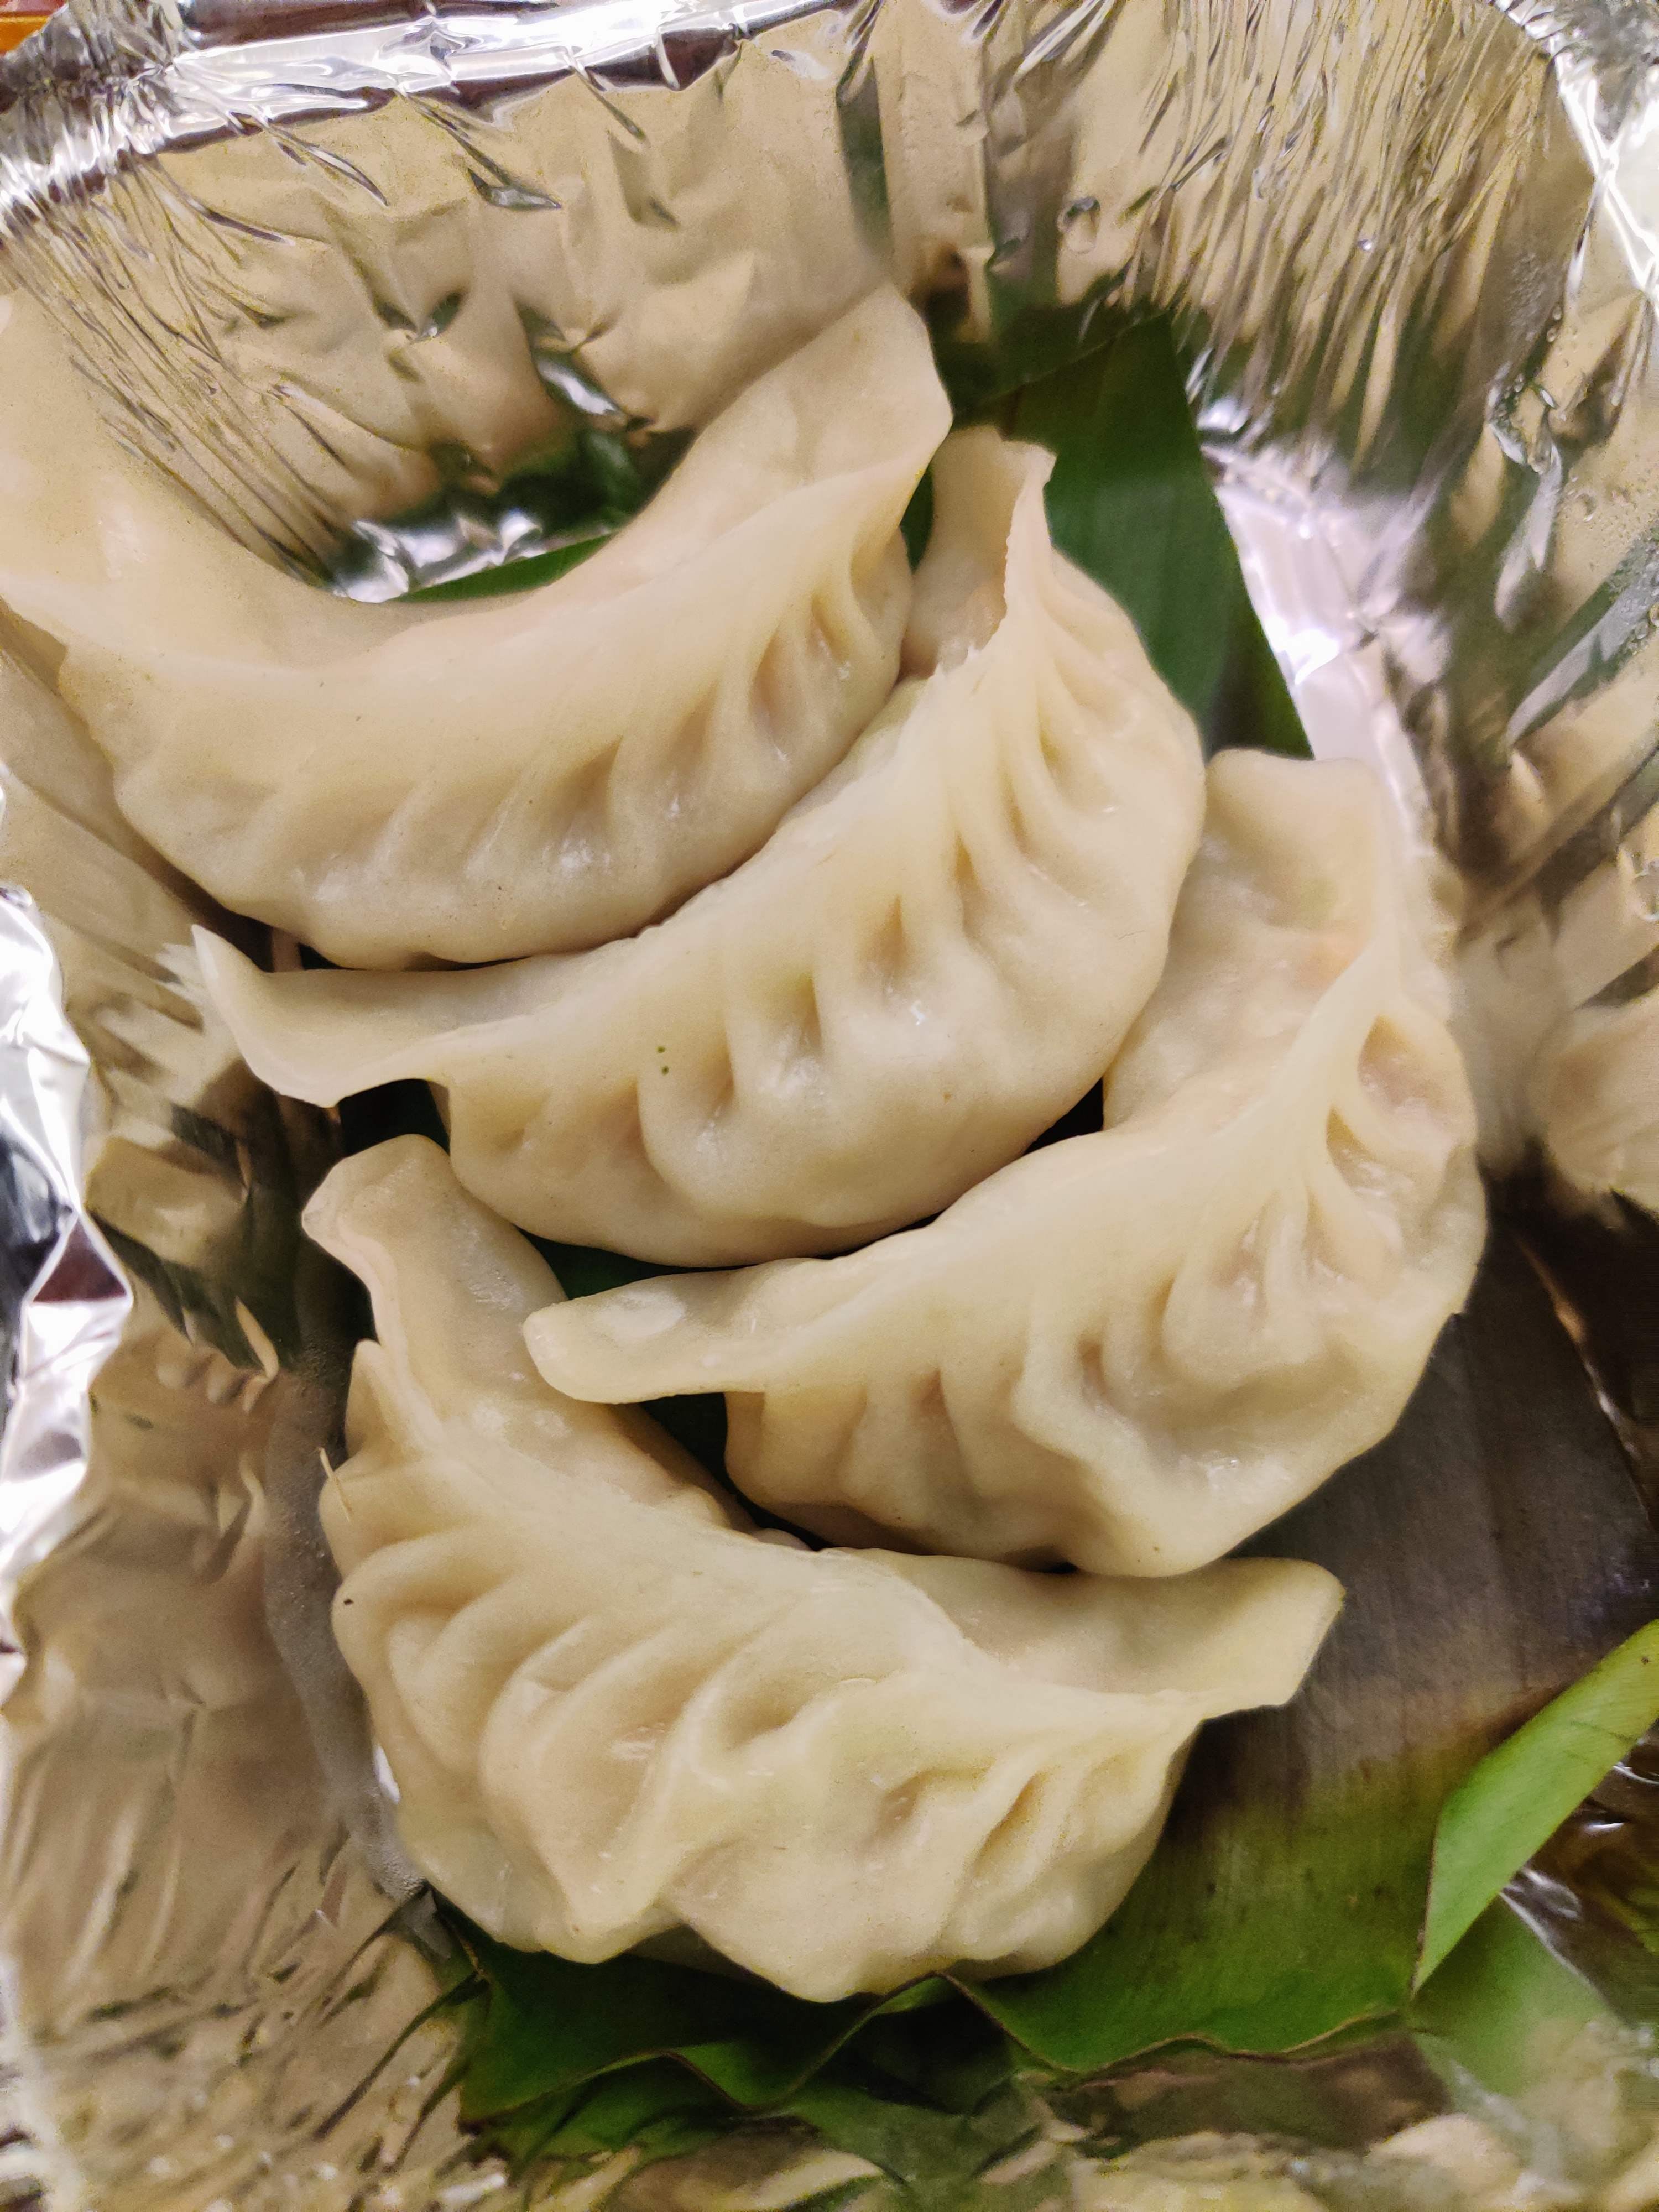 Dumpling,Dish,Jiaozi,Food,Cuisine,Mongolian food,Momo,Ingredient,Buuz,Produce